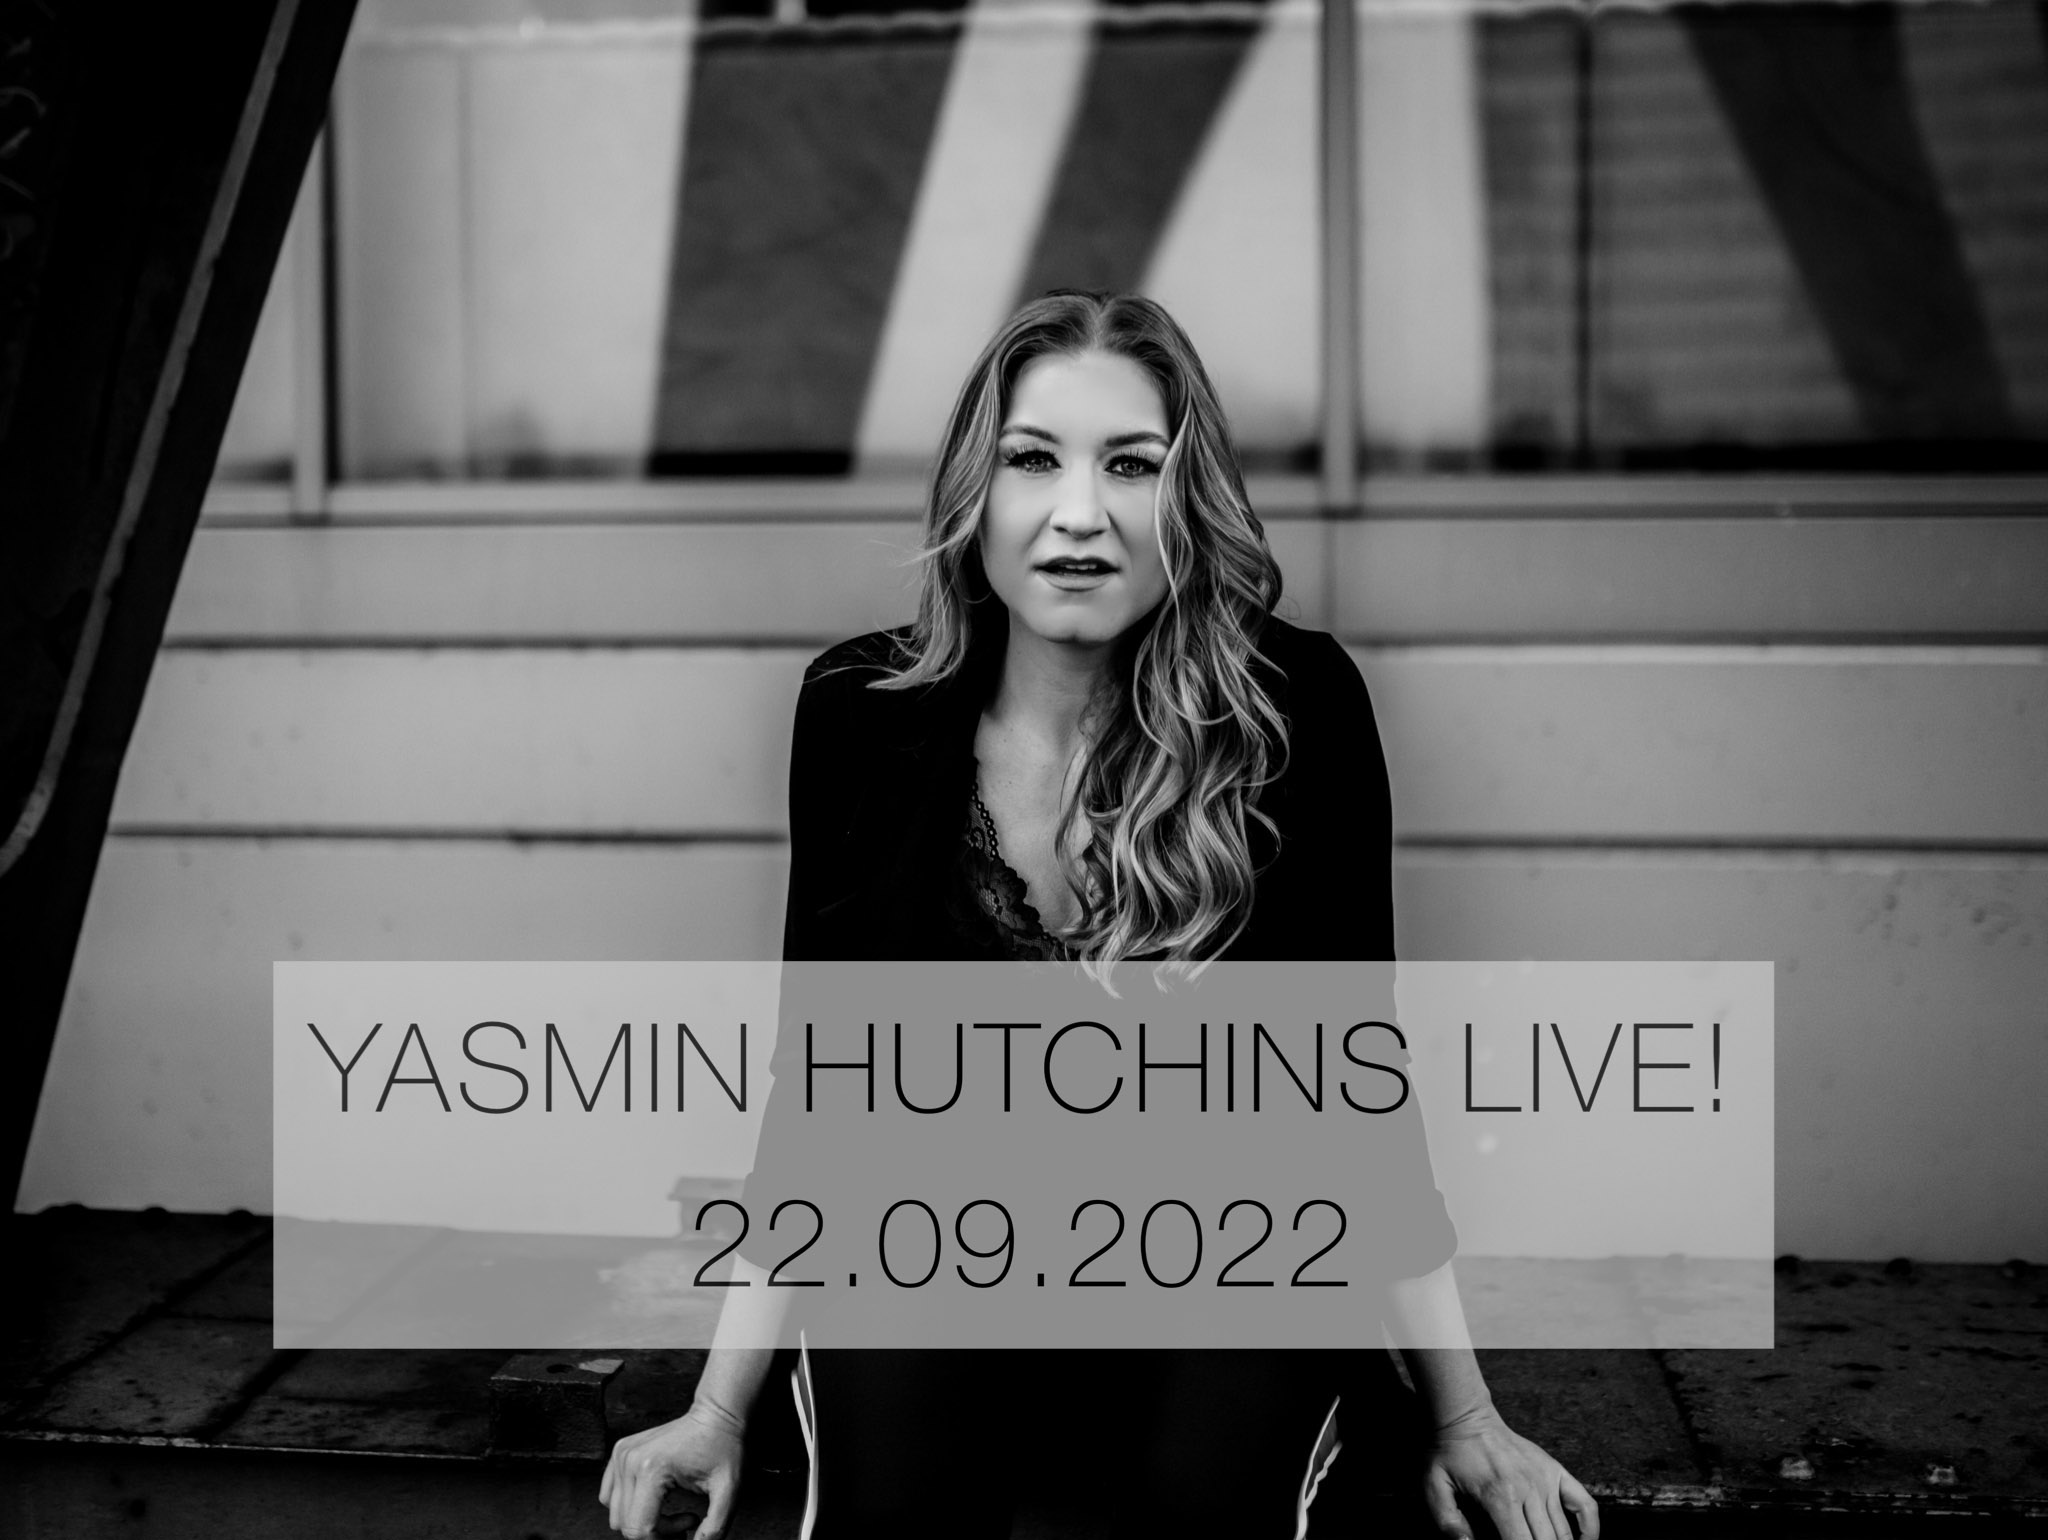 YASMIN HUTCHINS LIVE! Poster